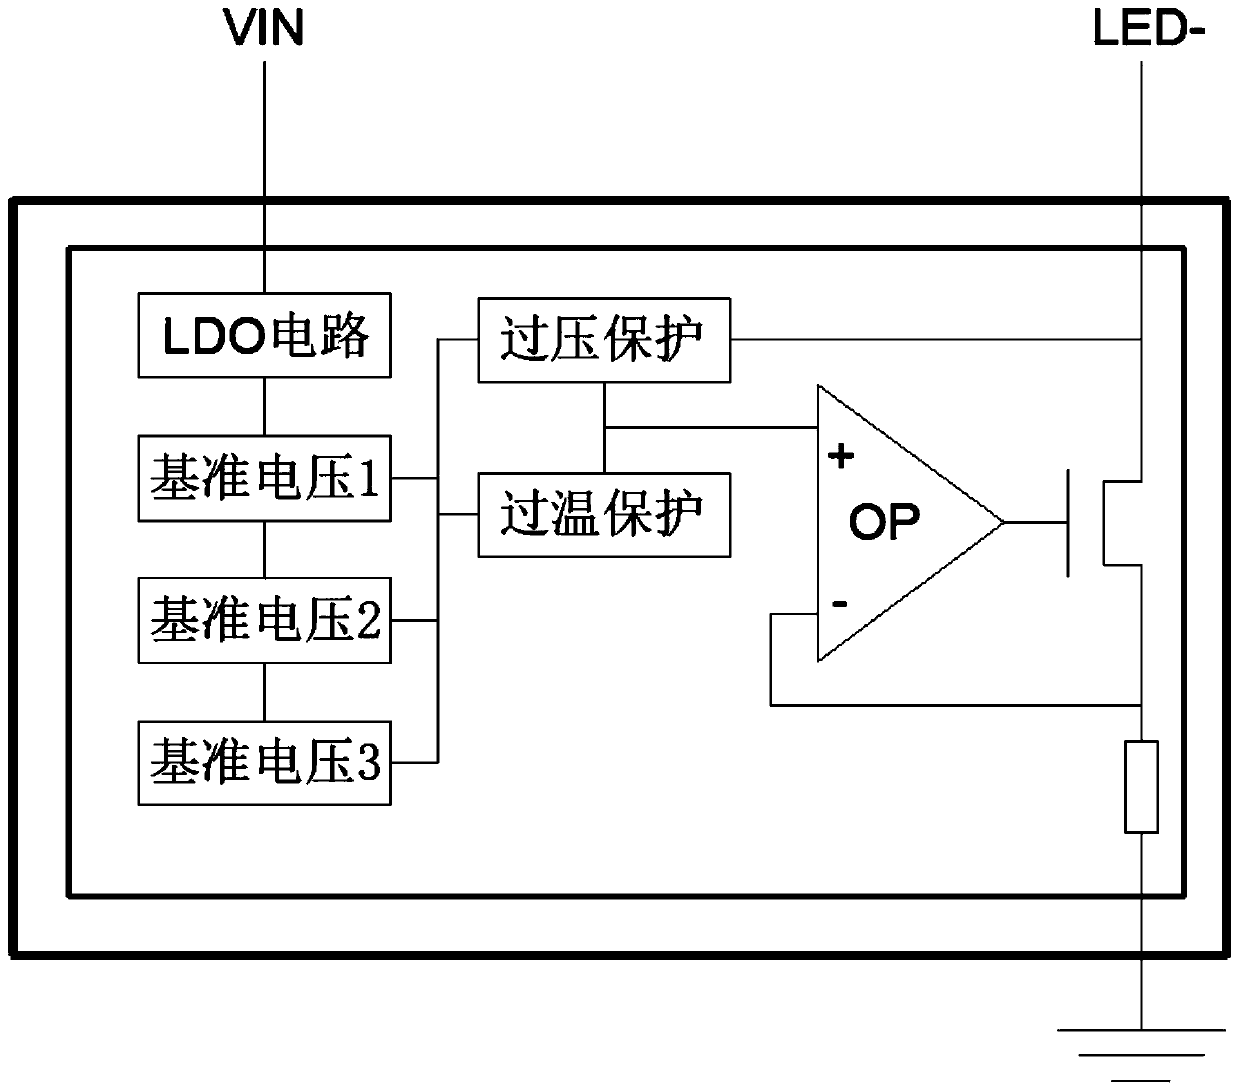 Constant-voltage driven COB light source